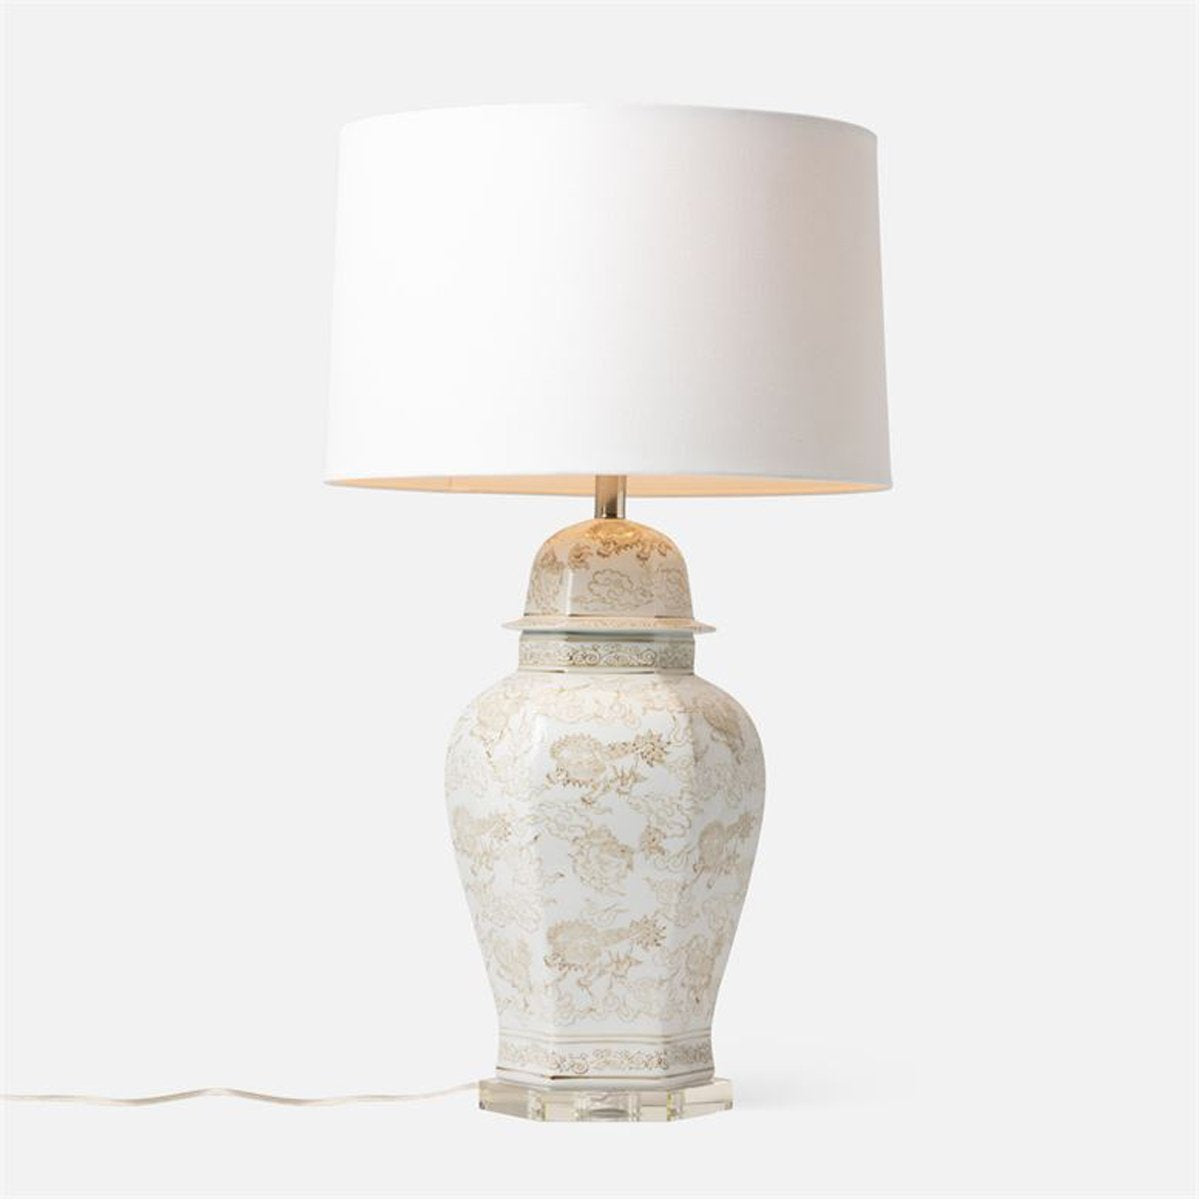 The prettiest lamp 😍 . . . . #organichome #ShareMyTargetStyle